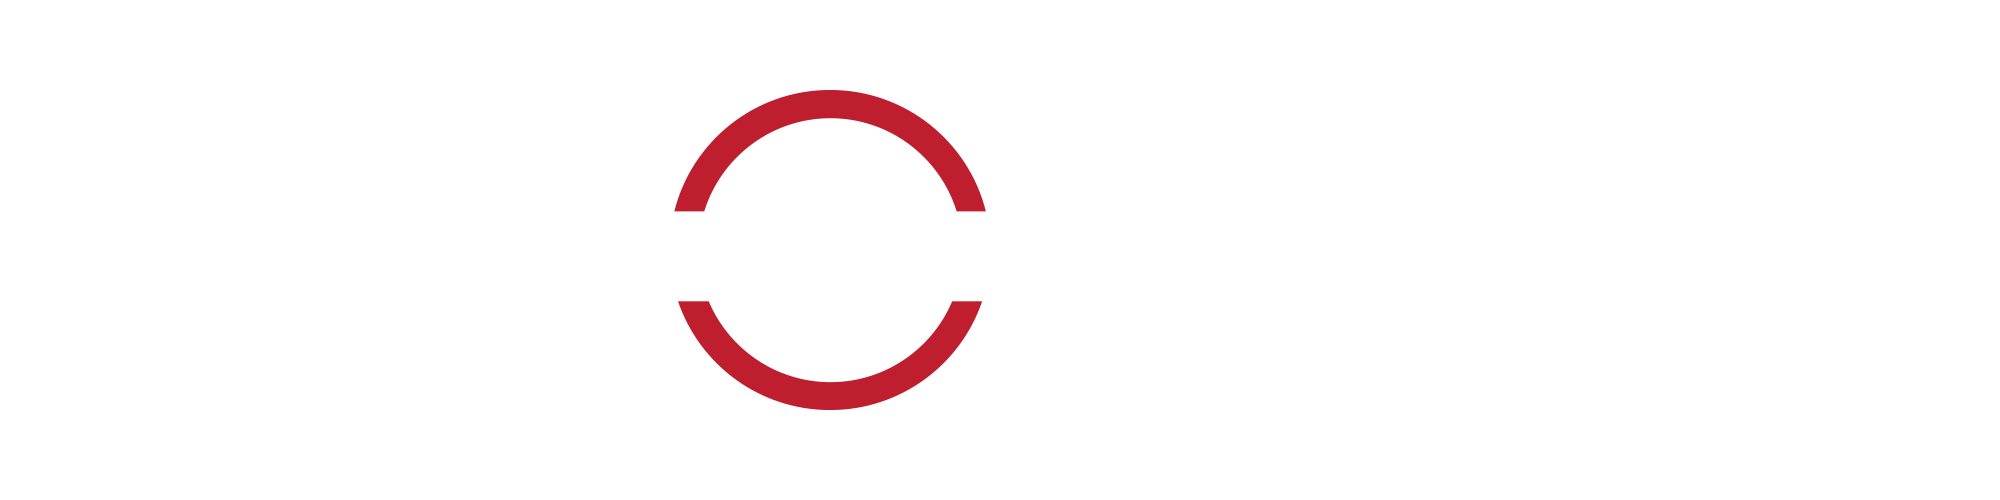 Jumpstart Video Production Company Cleveland